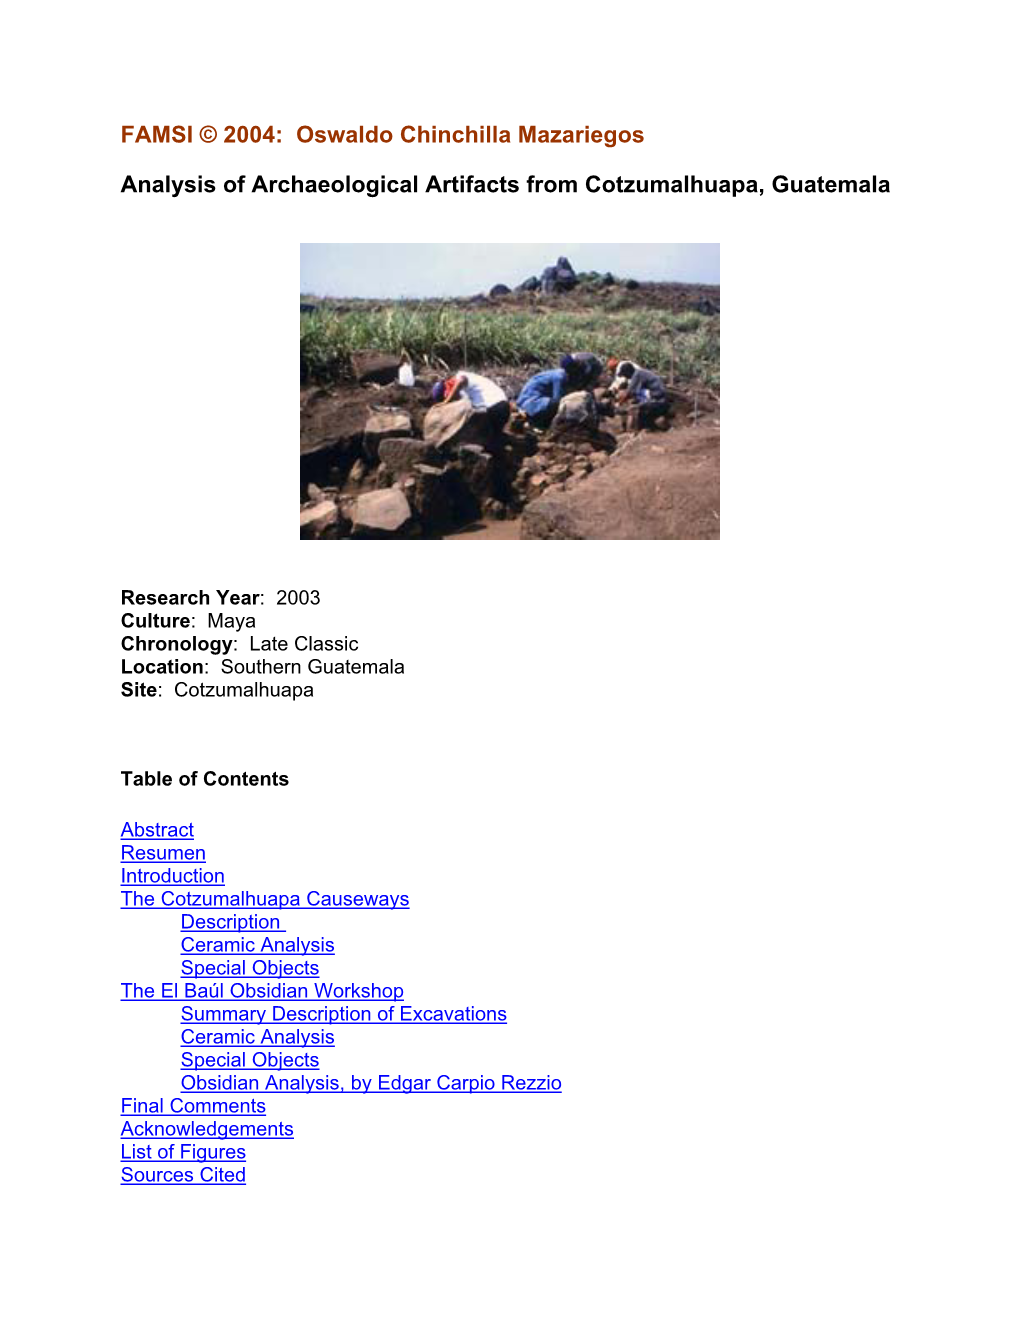 Analysis of Archaeological Artifacts from Cotzumalhuapa, Guatemala